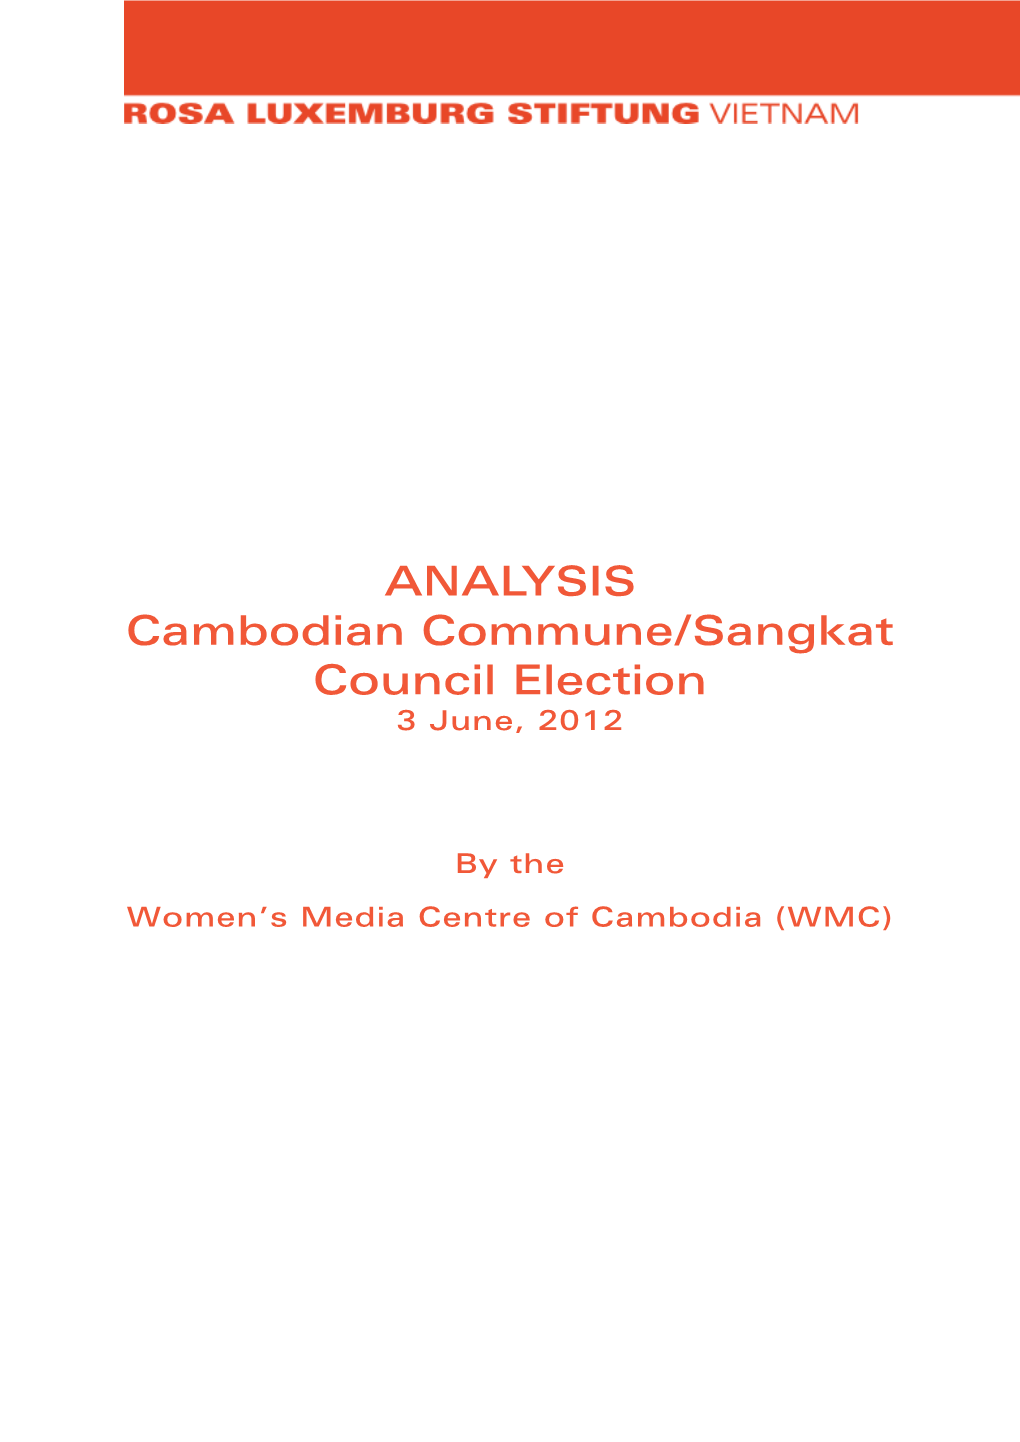 ANALYSIS Cambodian Commune/Sangkat Council Election 3 June, 2012